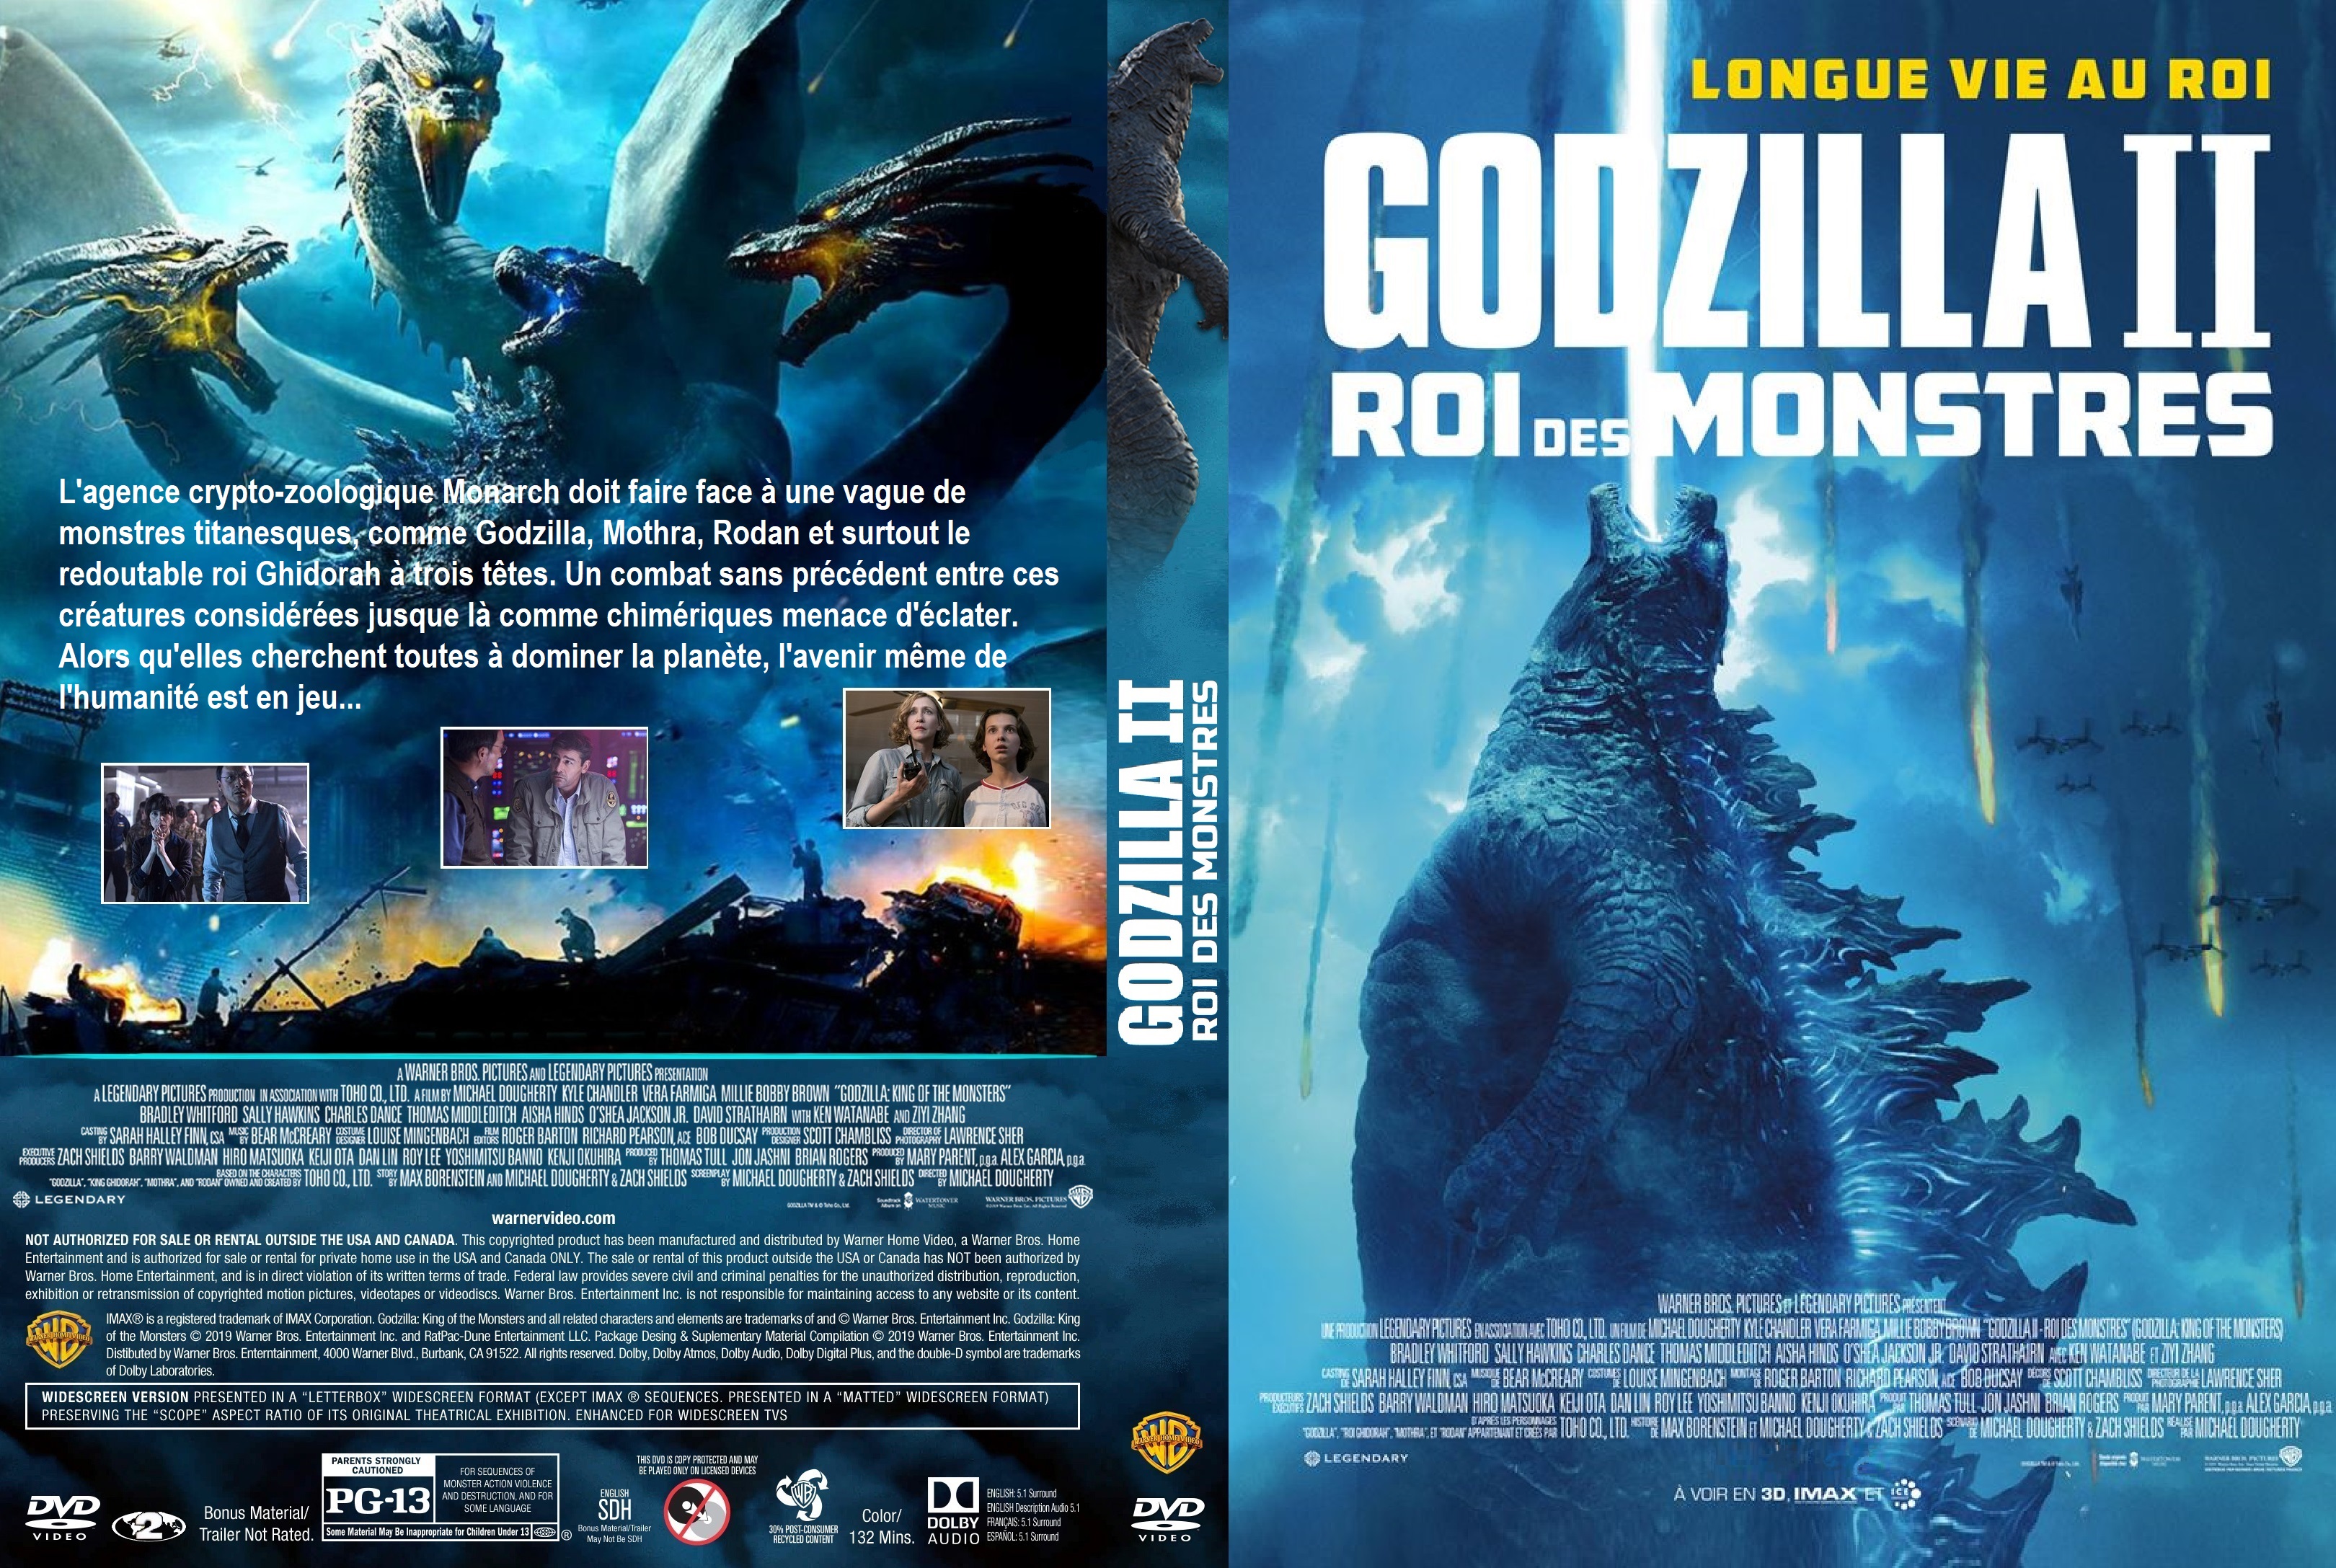 Jaquette DVD Godzilla II Roi des Monstres custom